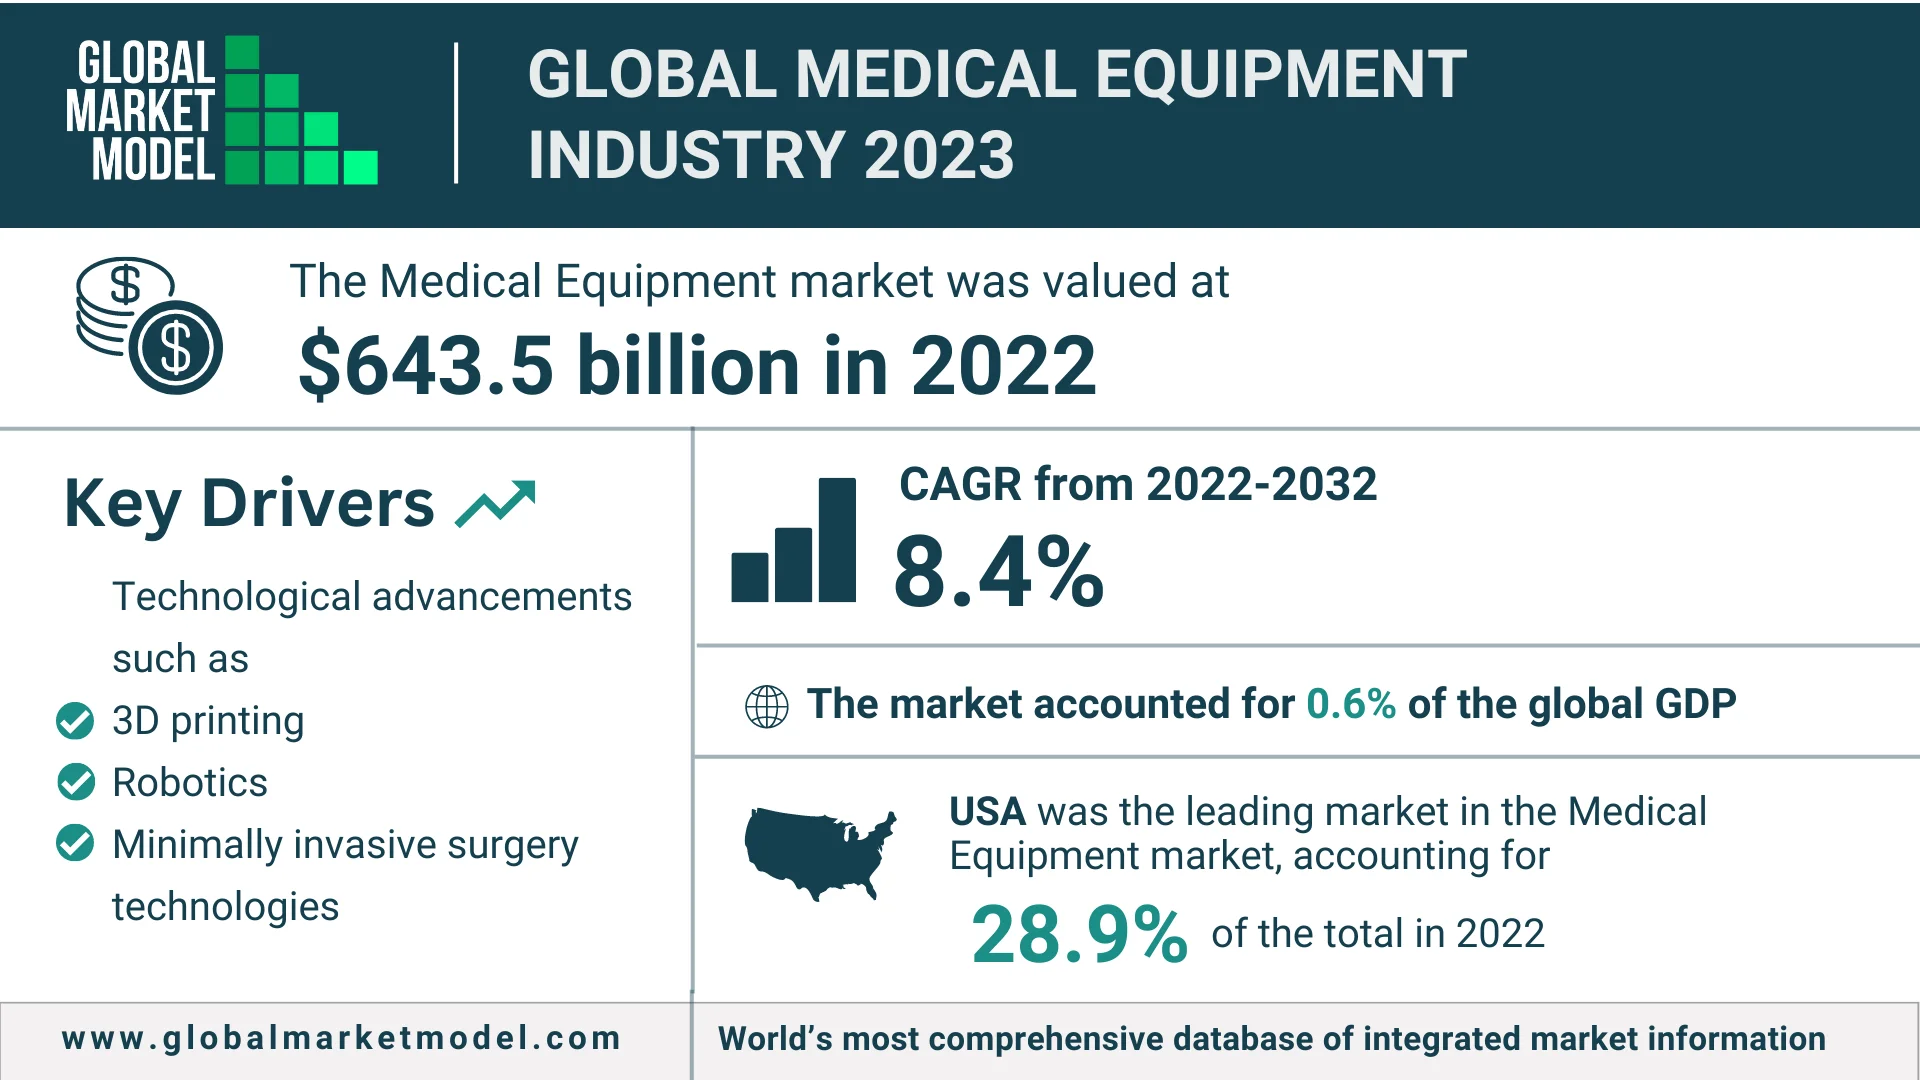 Global Medical Equipment Industry 2023